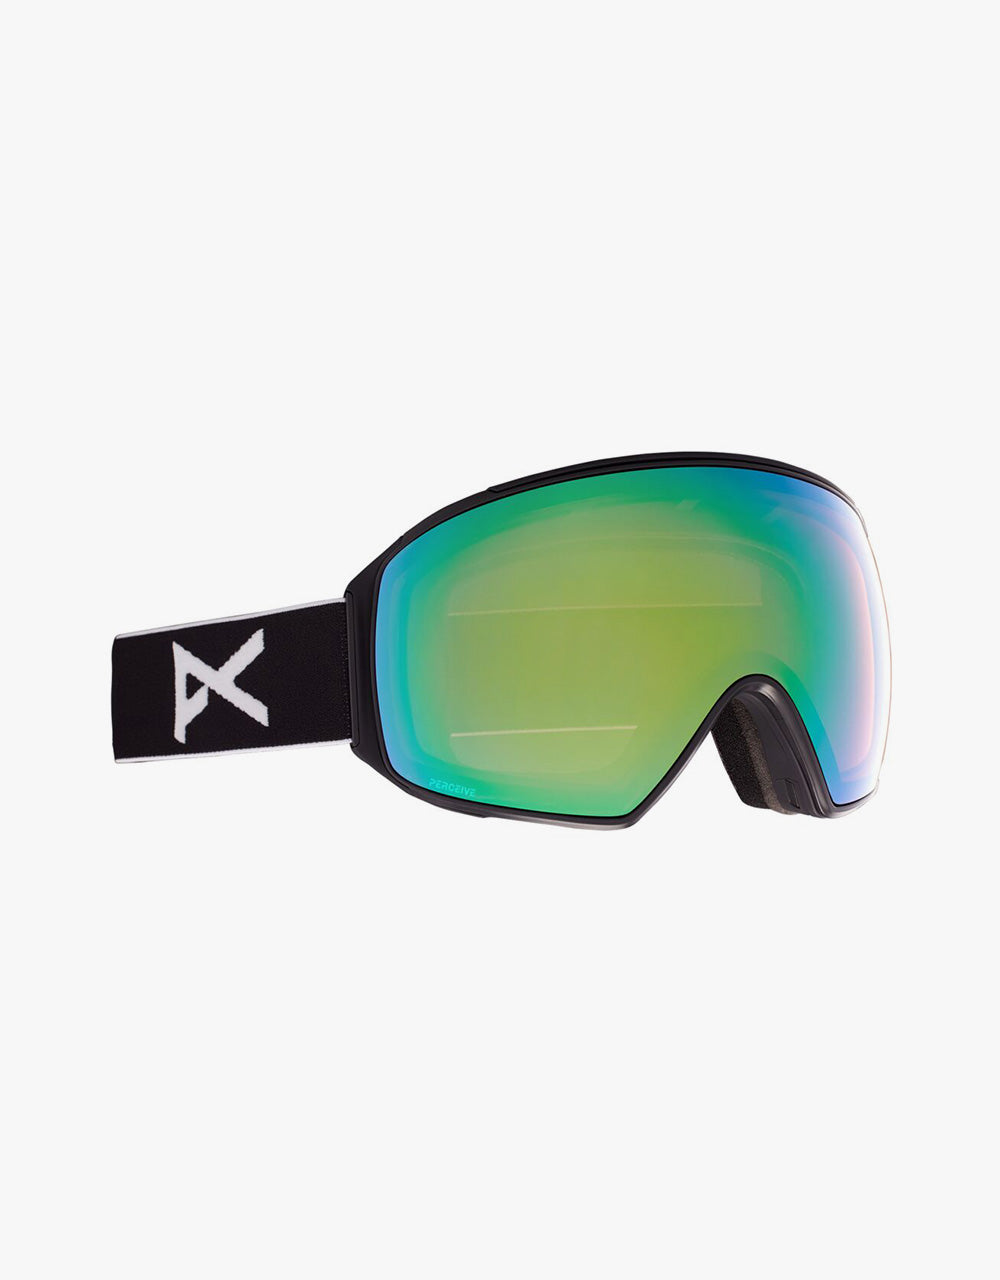 Anon M4 MFI® Toric Snowboard Goggles - Black/Perceive Variable Green